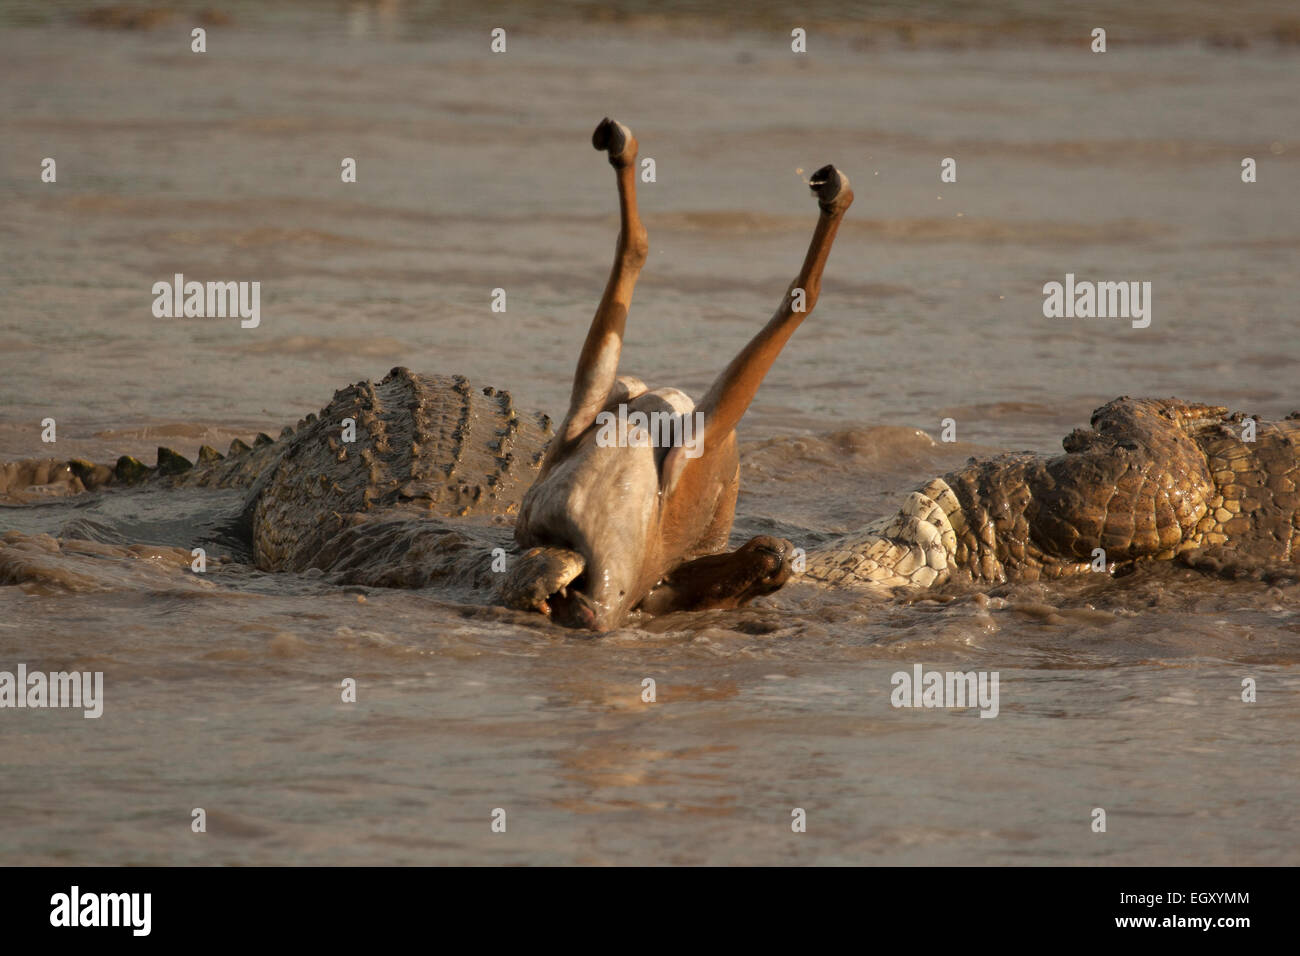 Two Crocodiles eating a Impala in a Lake Stock Photo